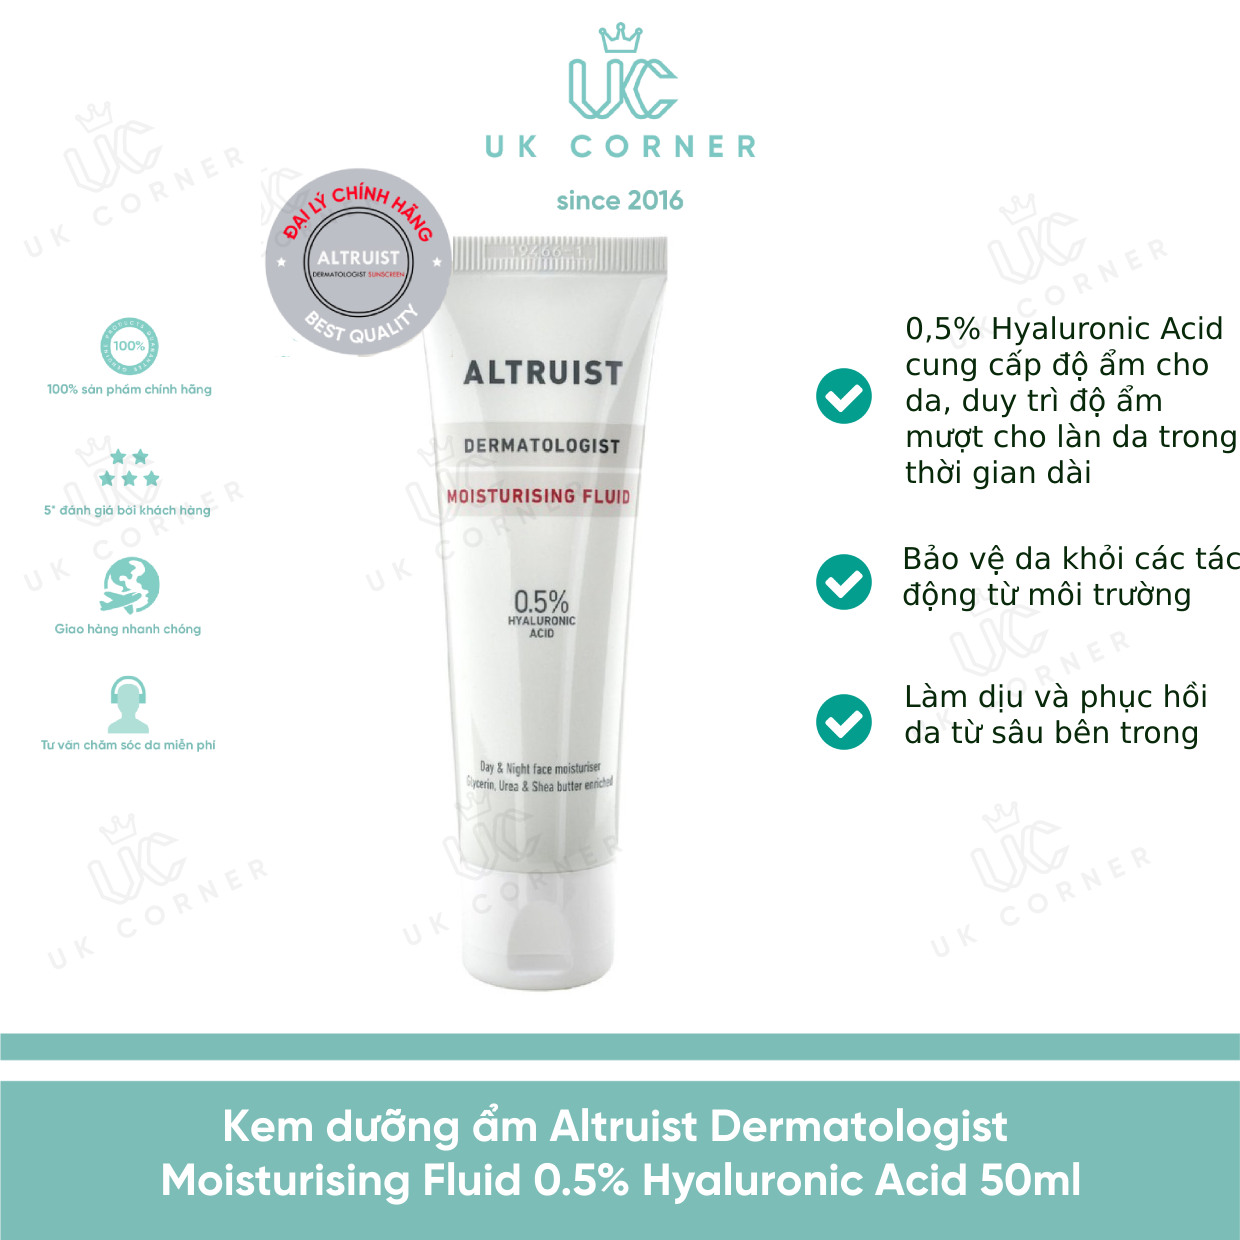 Kem dưỡng ẩm Altruist Dermatologist Moisturising Fluid 0.5% Hyaluronic Acid 50ml (date 12/23 thanh lí)